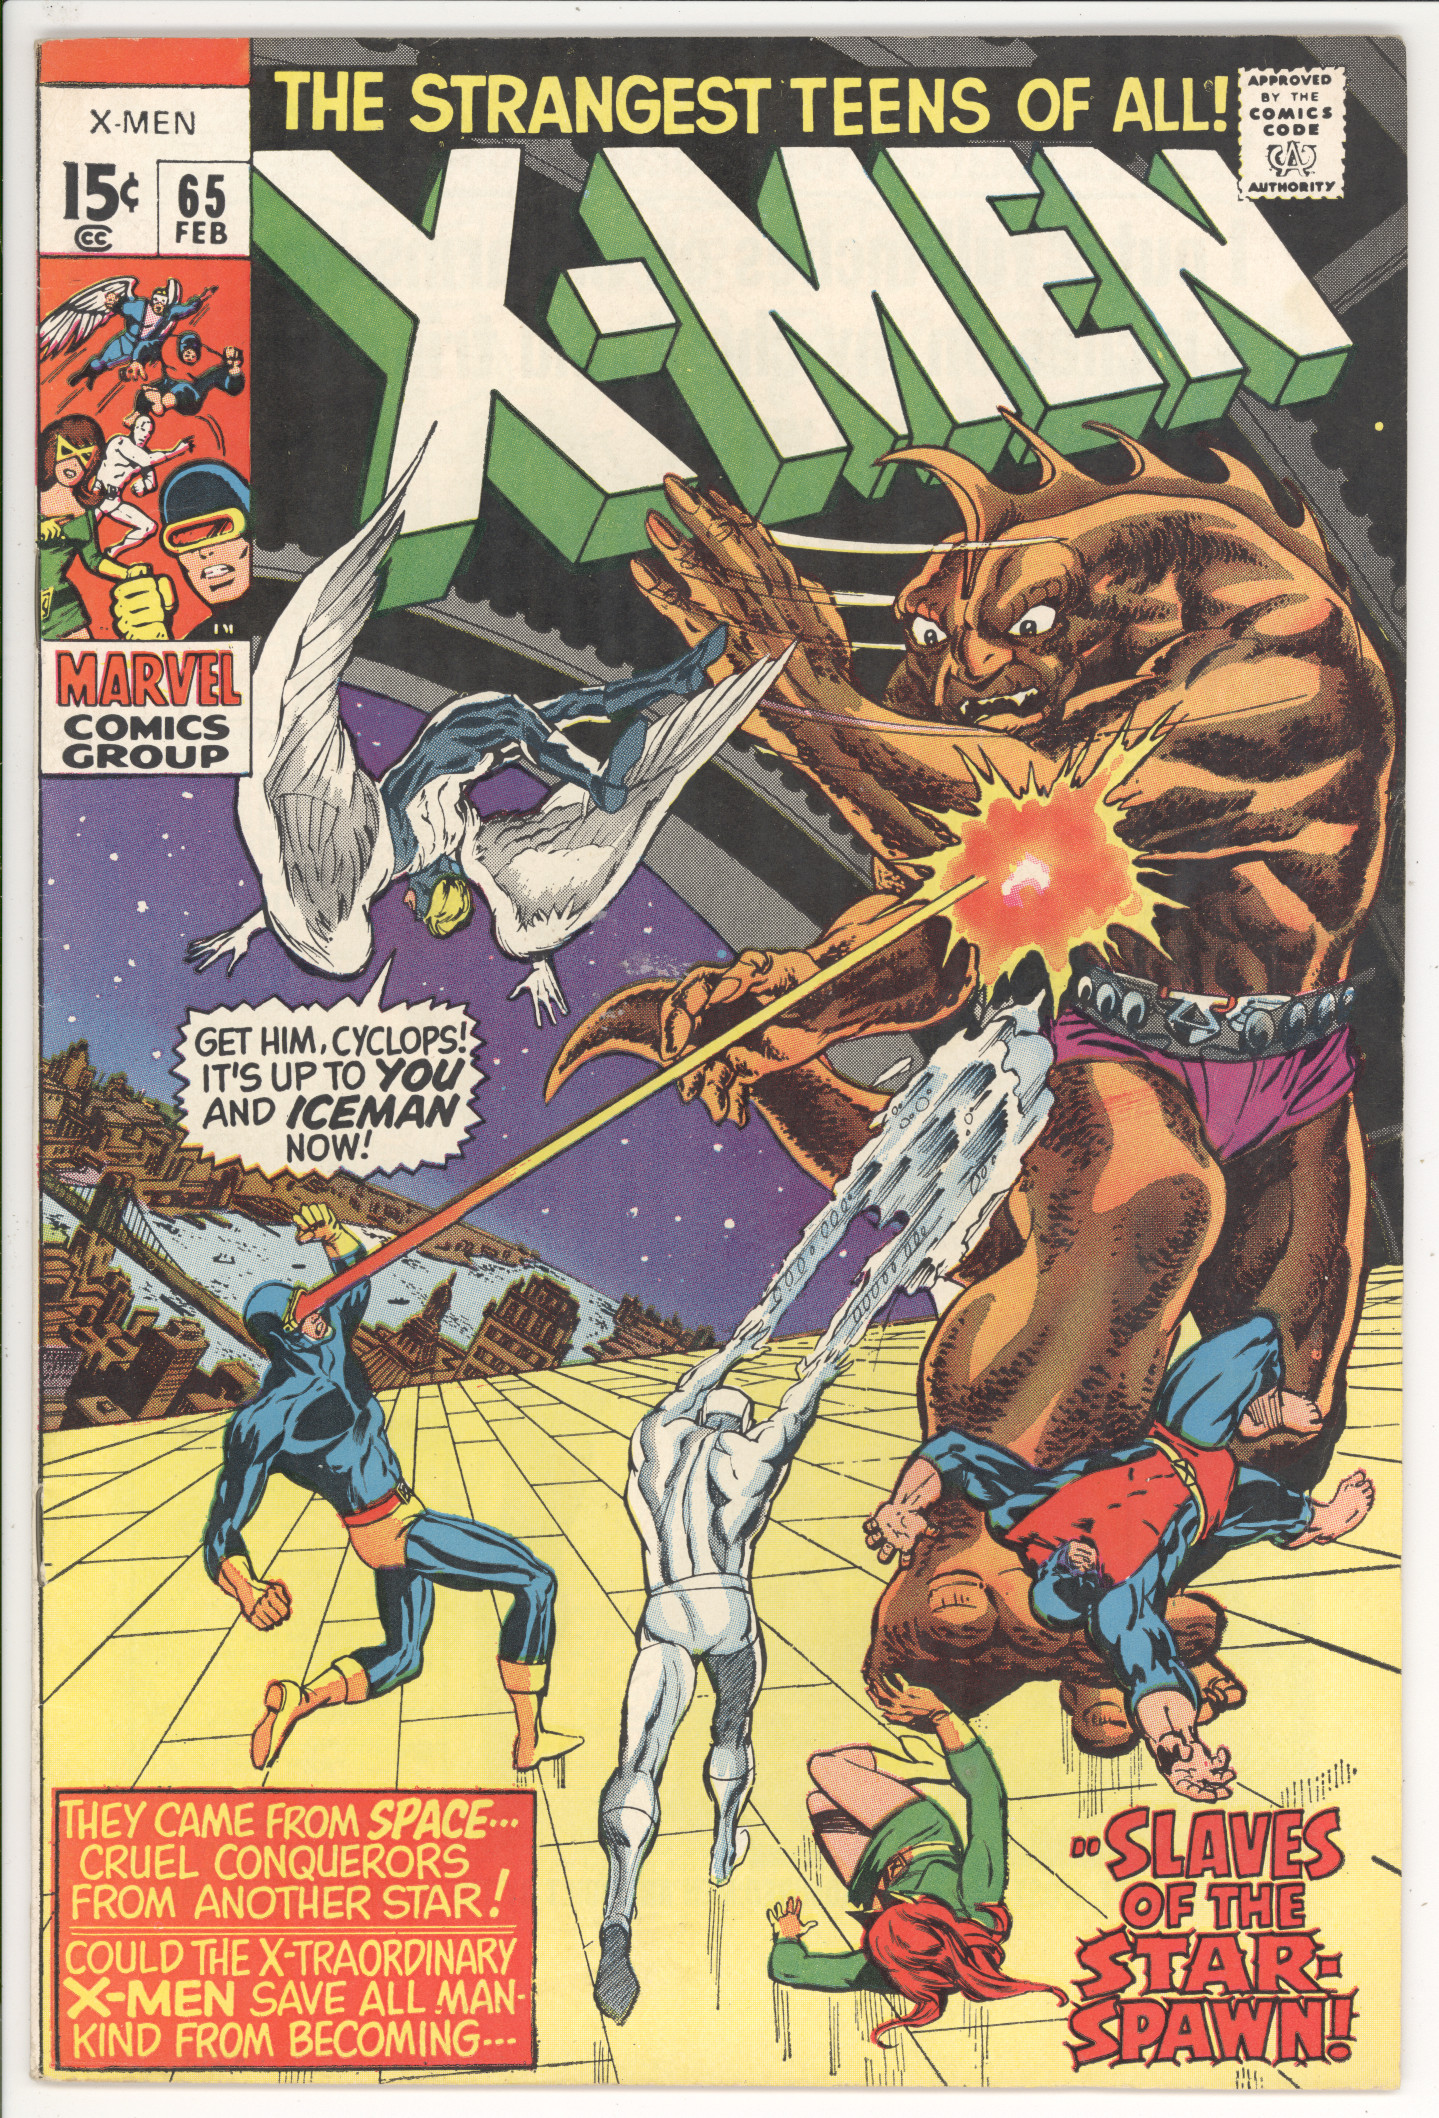 X-Men  #65